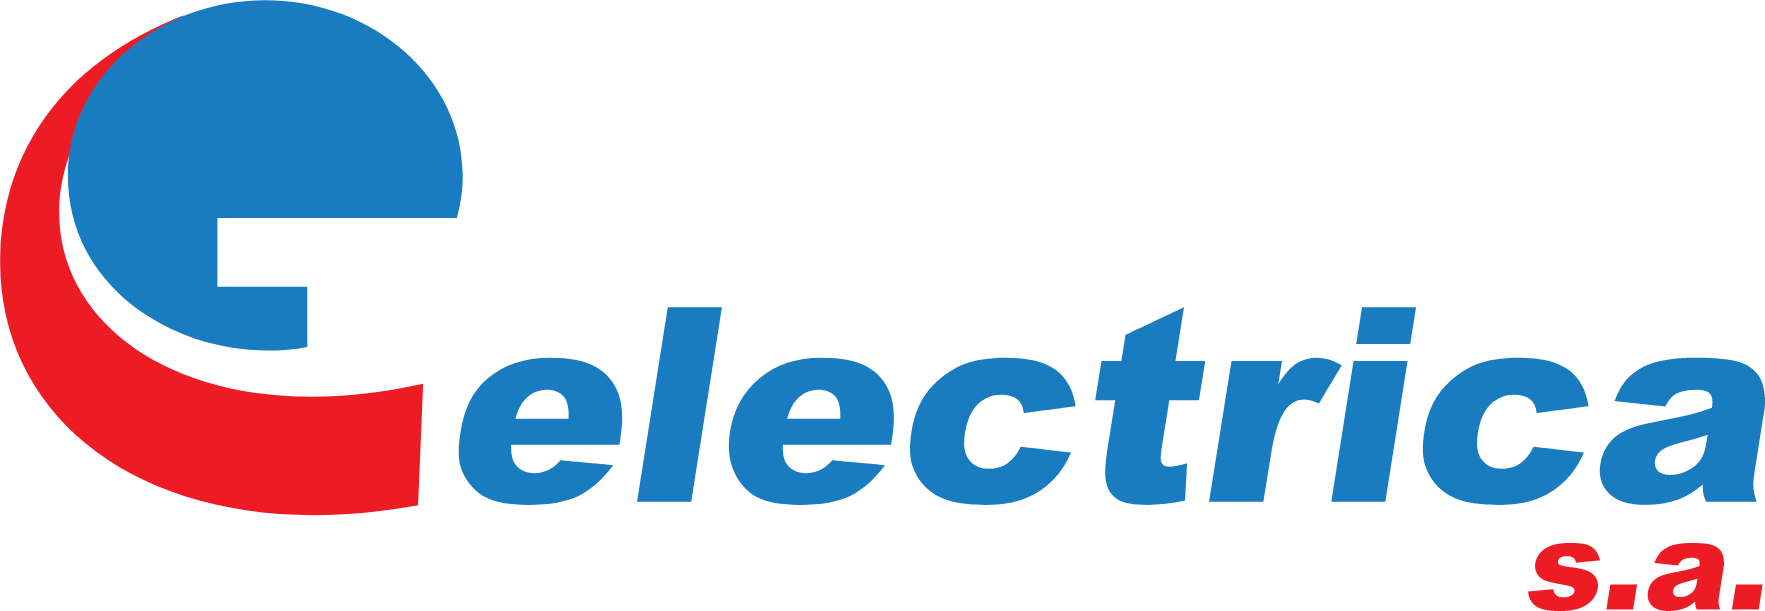 Electrica
 logo large (transparent PNG)